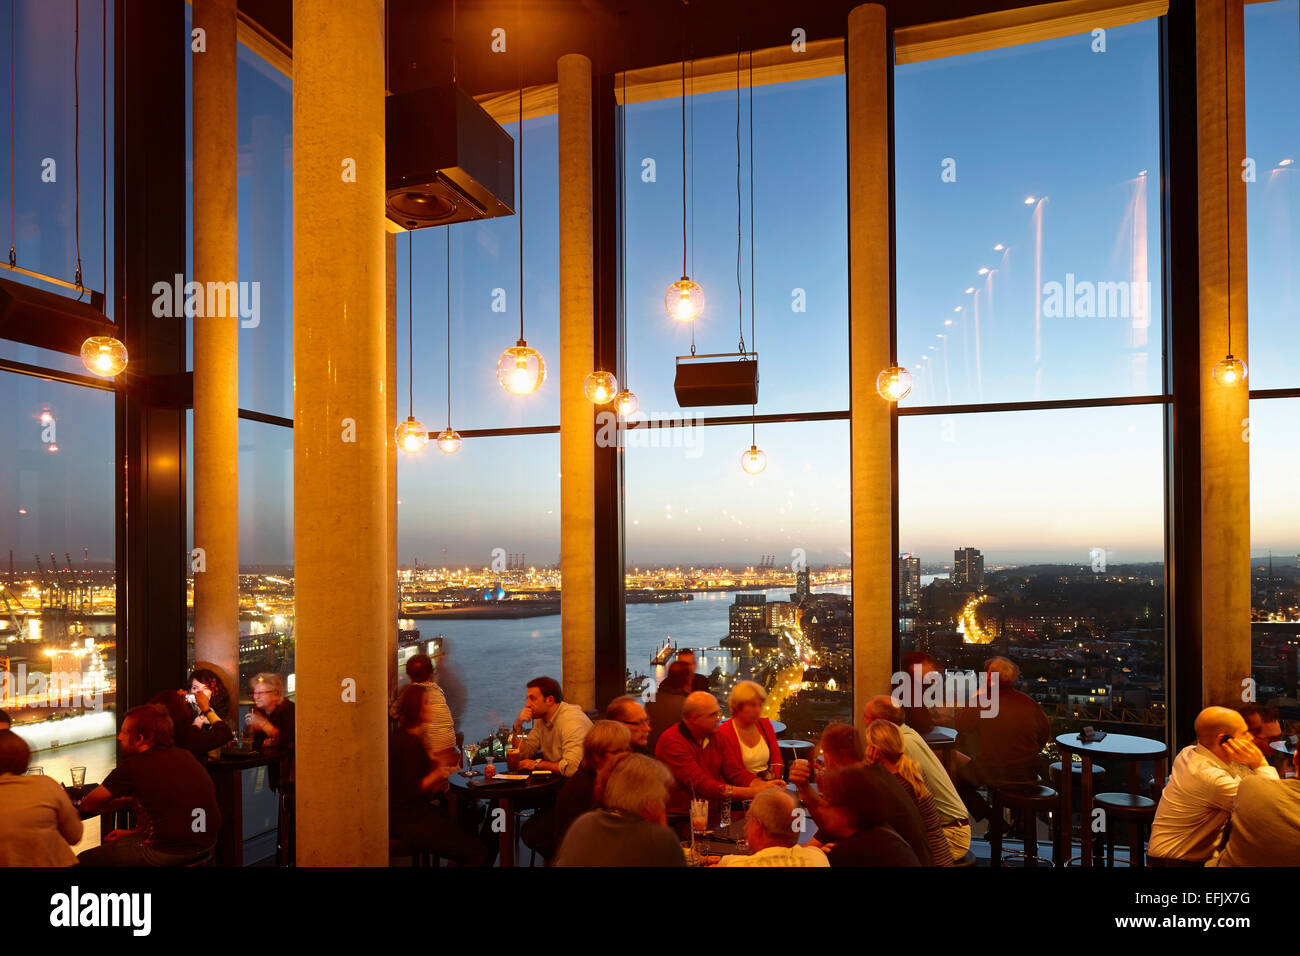 Bar, twentieth floor of the a Hotel, St. Pauli, Hamburg, Germany Stock Photo